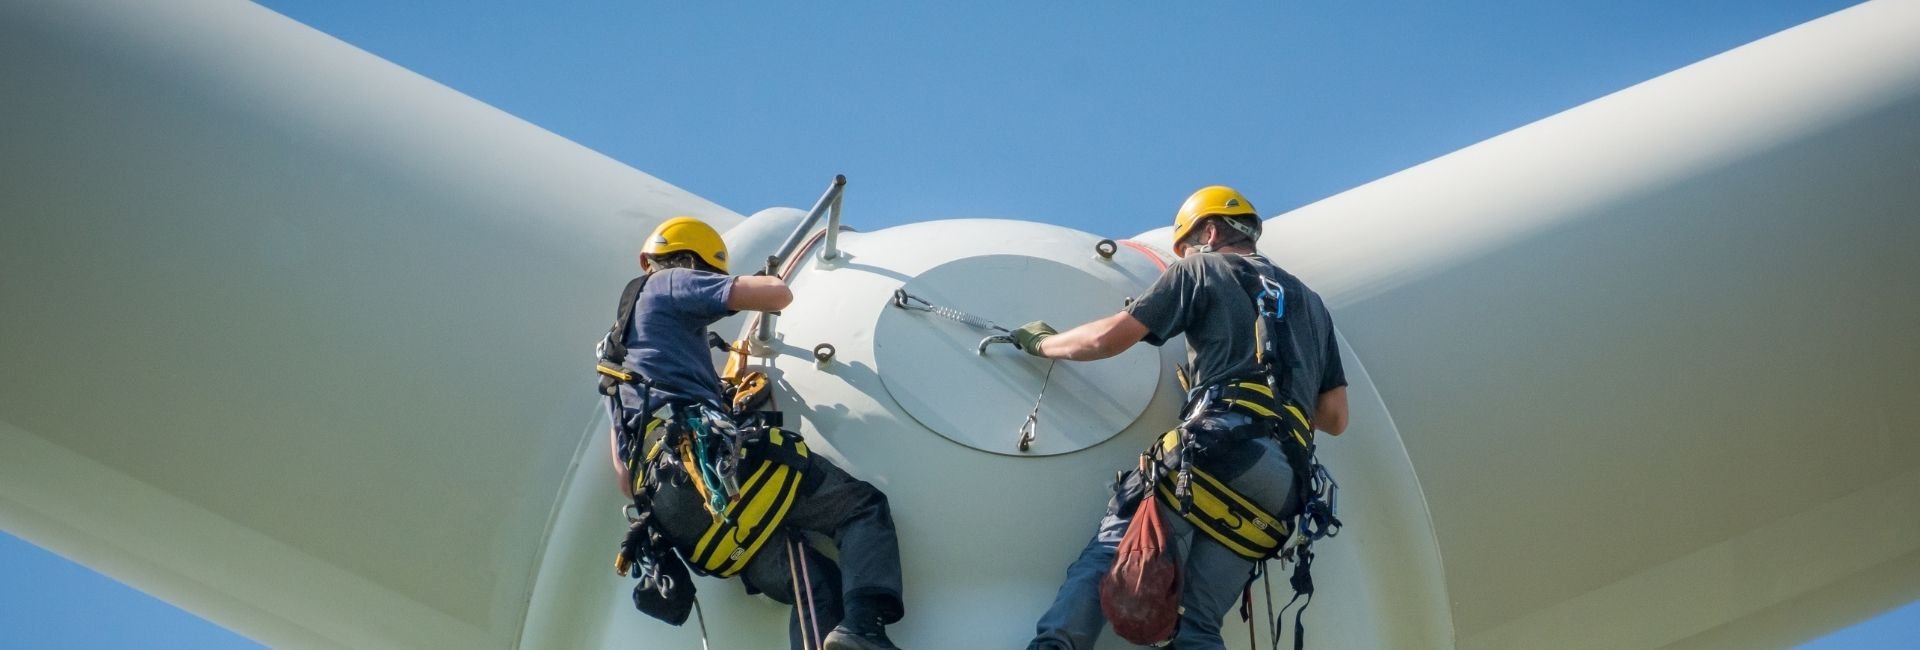 wind turbine technicians work